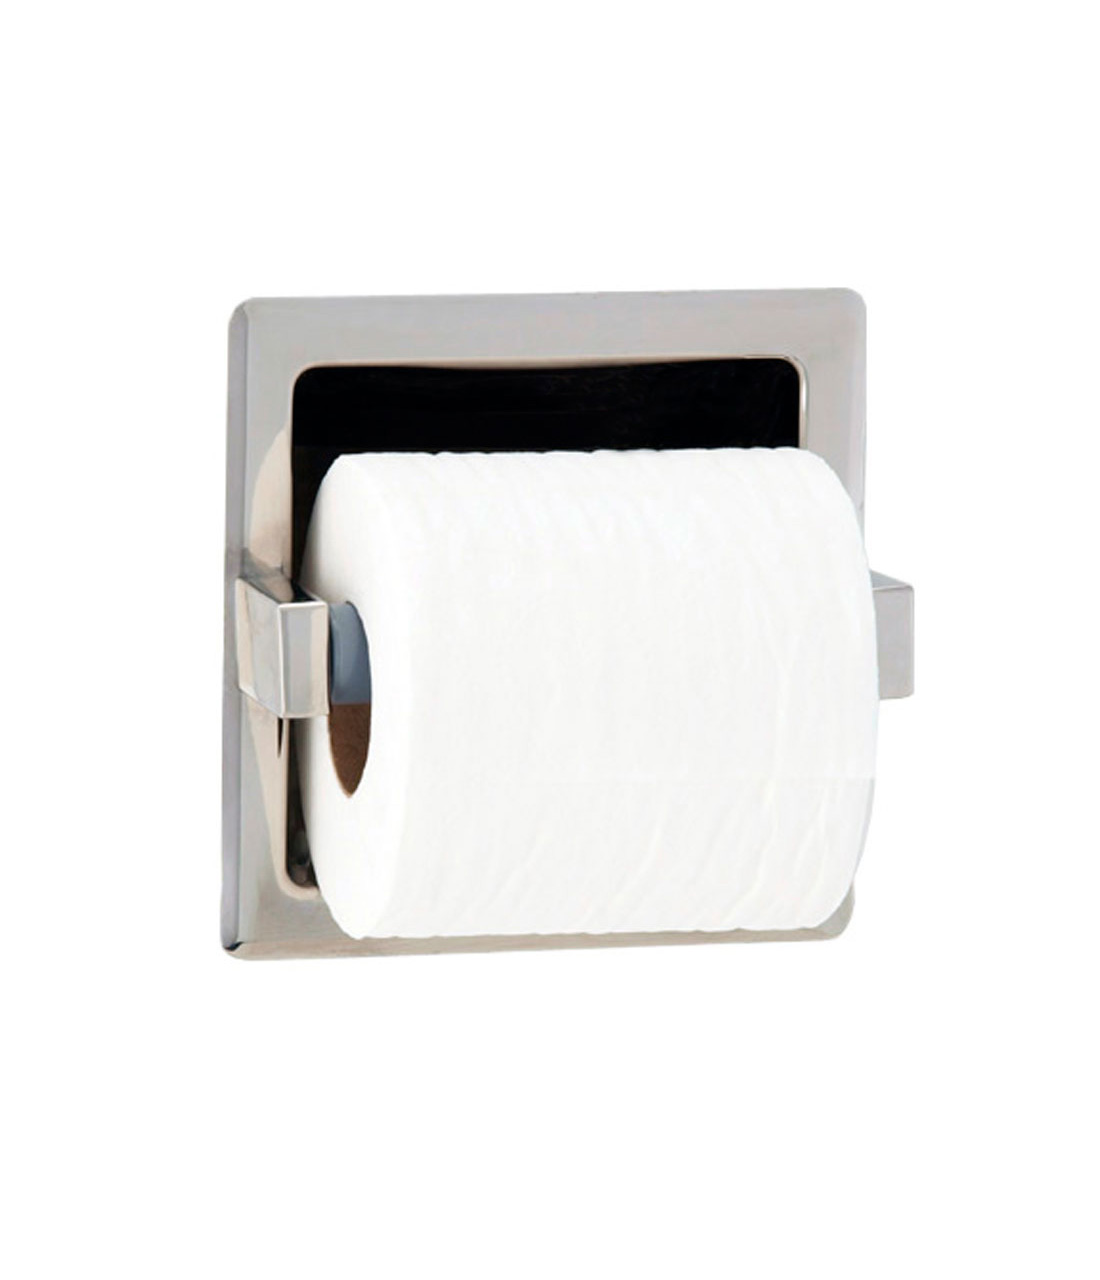 Recessed Toilet Tissue Holder - (Model #: 212) Image